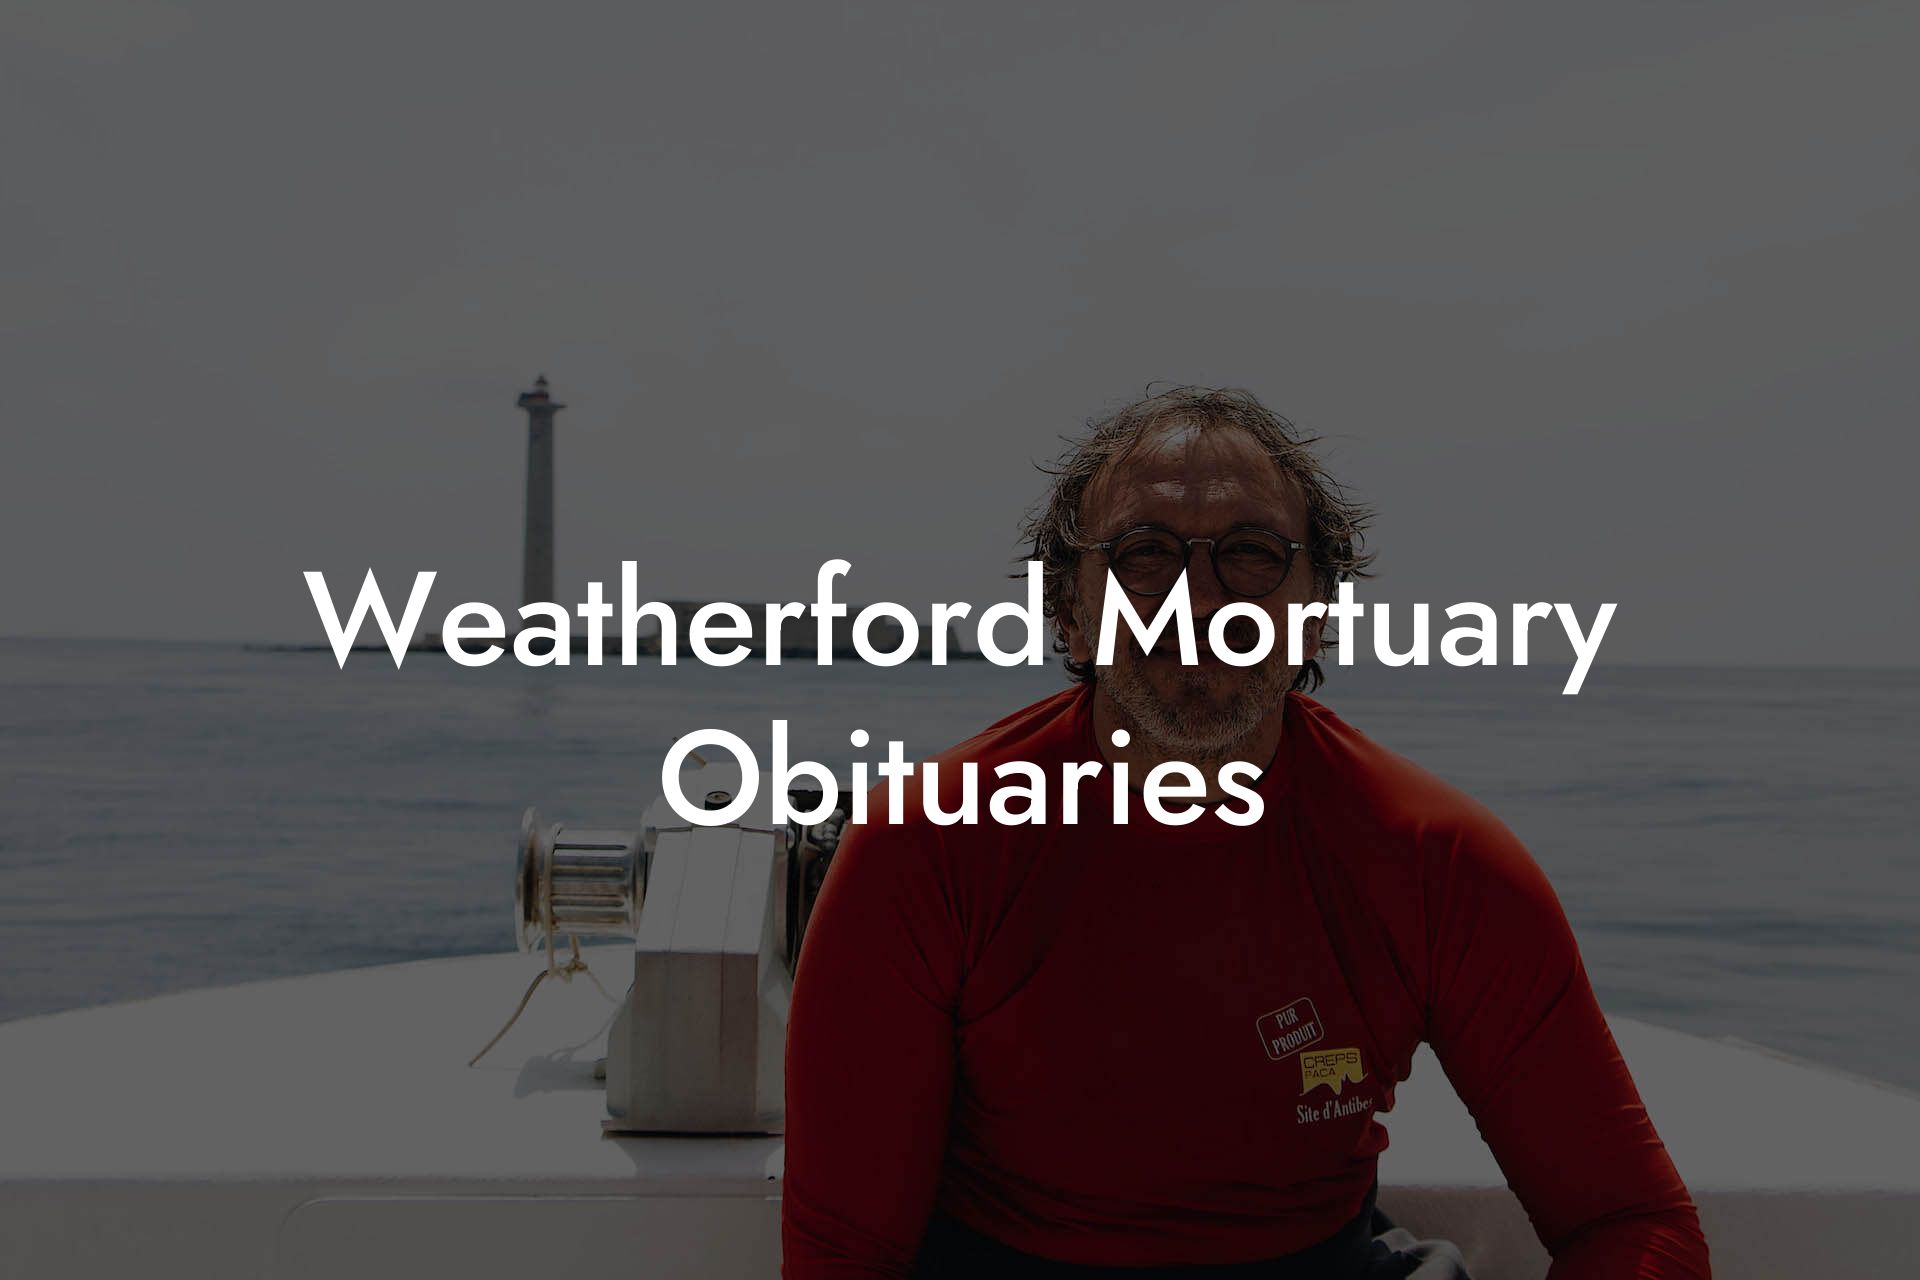 Weatherford Mortuary Obituaries